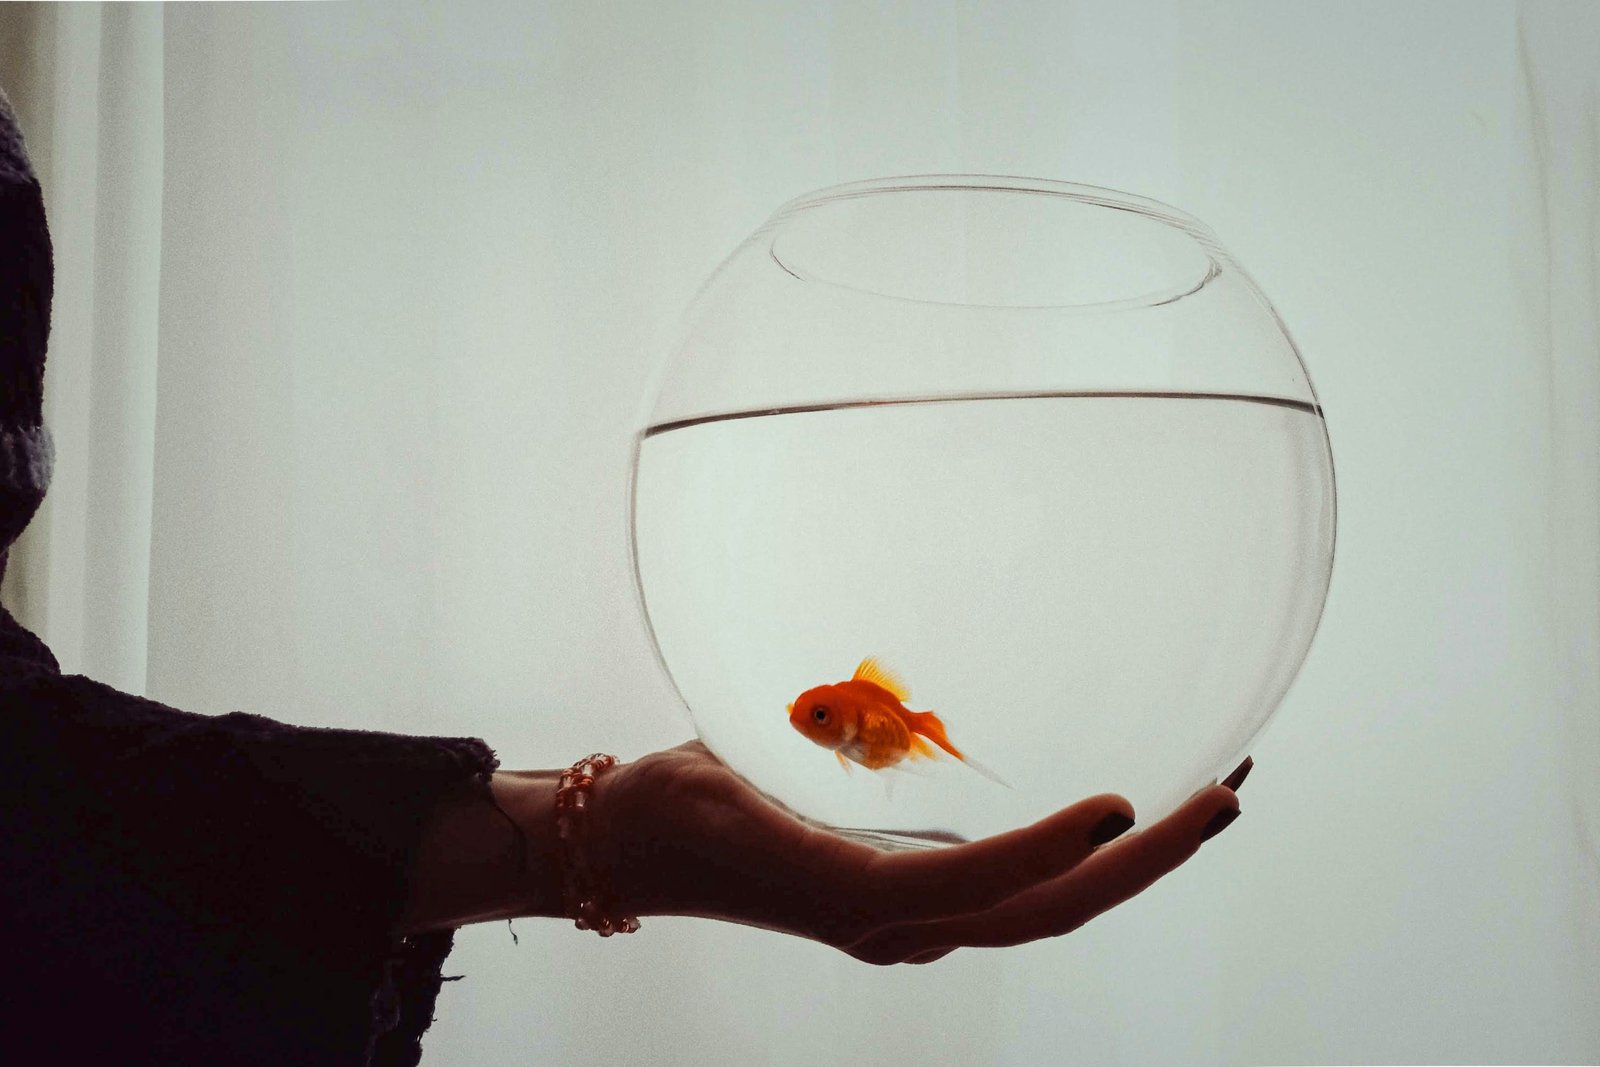 Aquascape Your Goldfish Tank Like a Pro: 10 Methods That Work